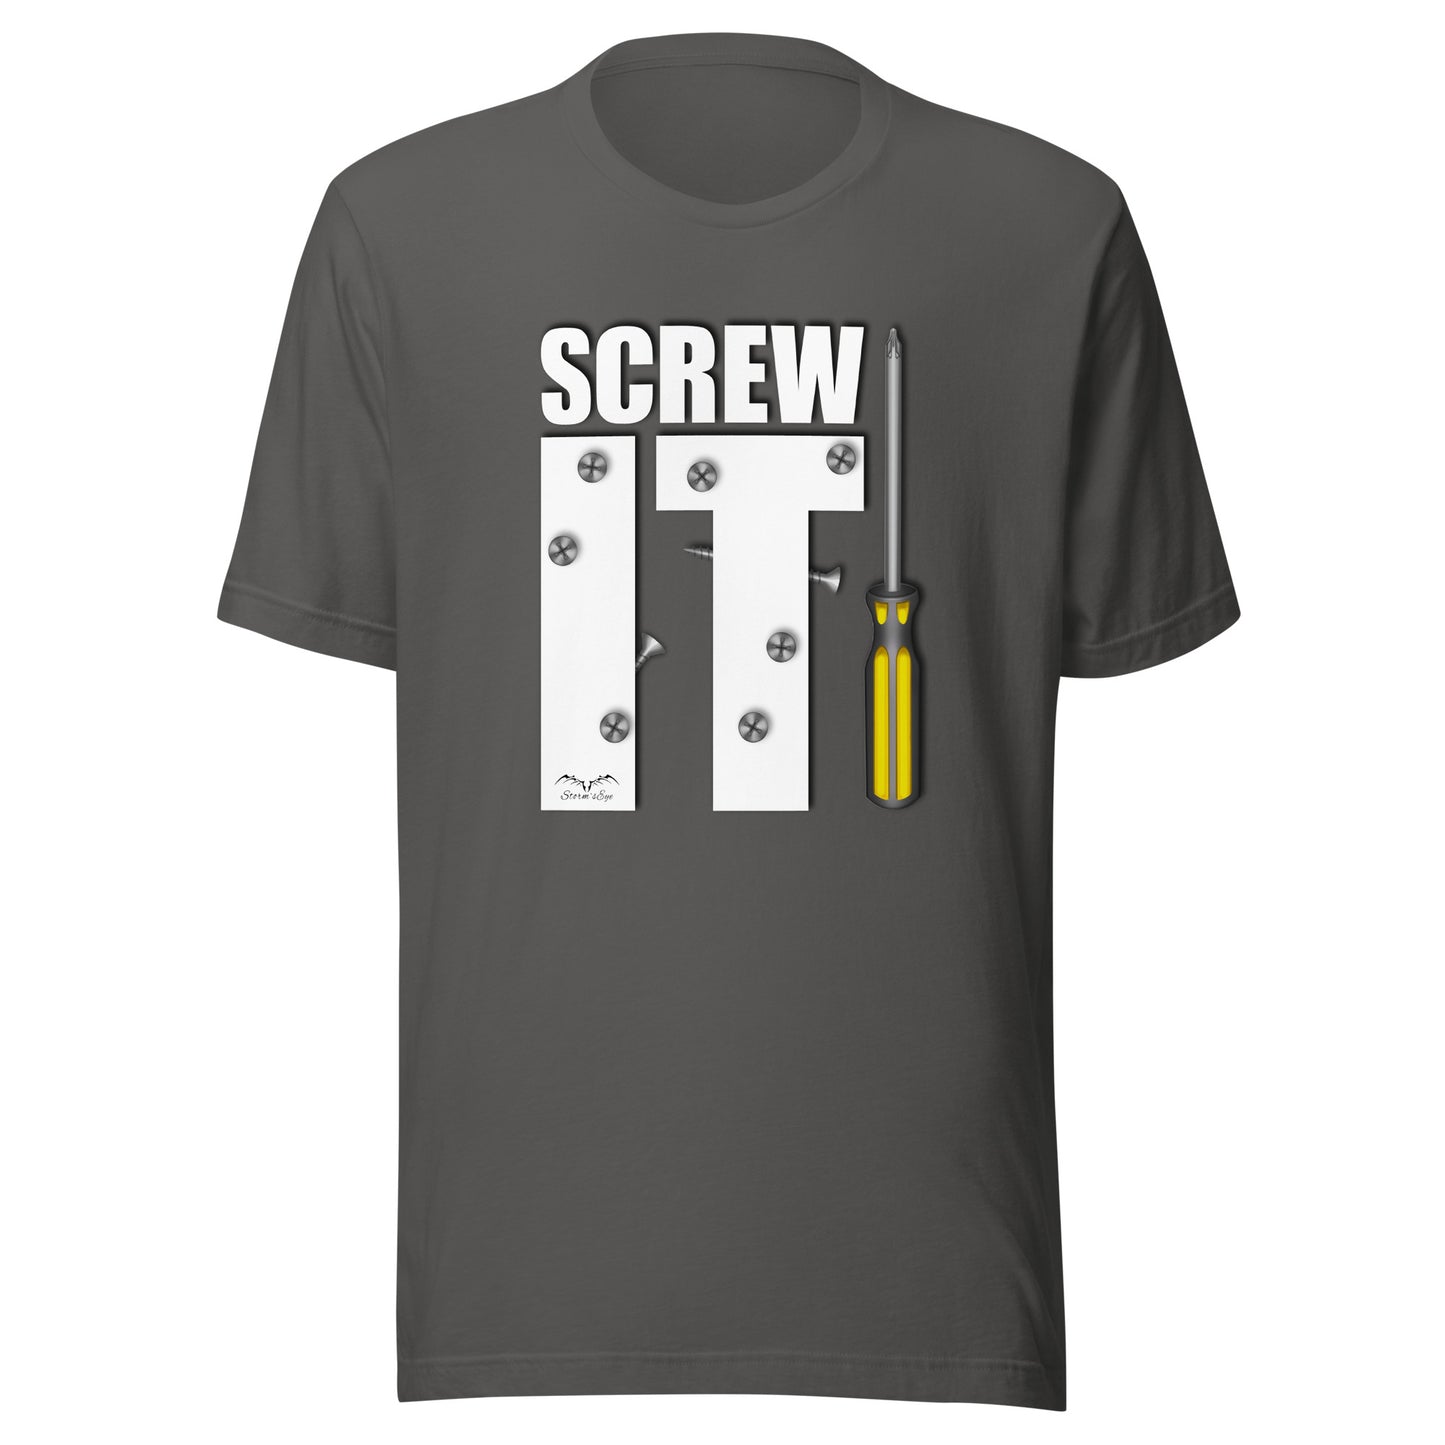 screw it DIY t-shirt grey, by Stormseye Design